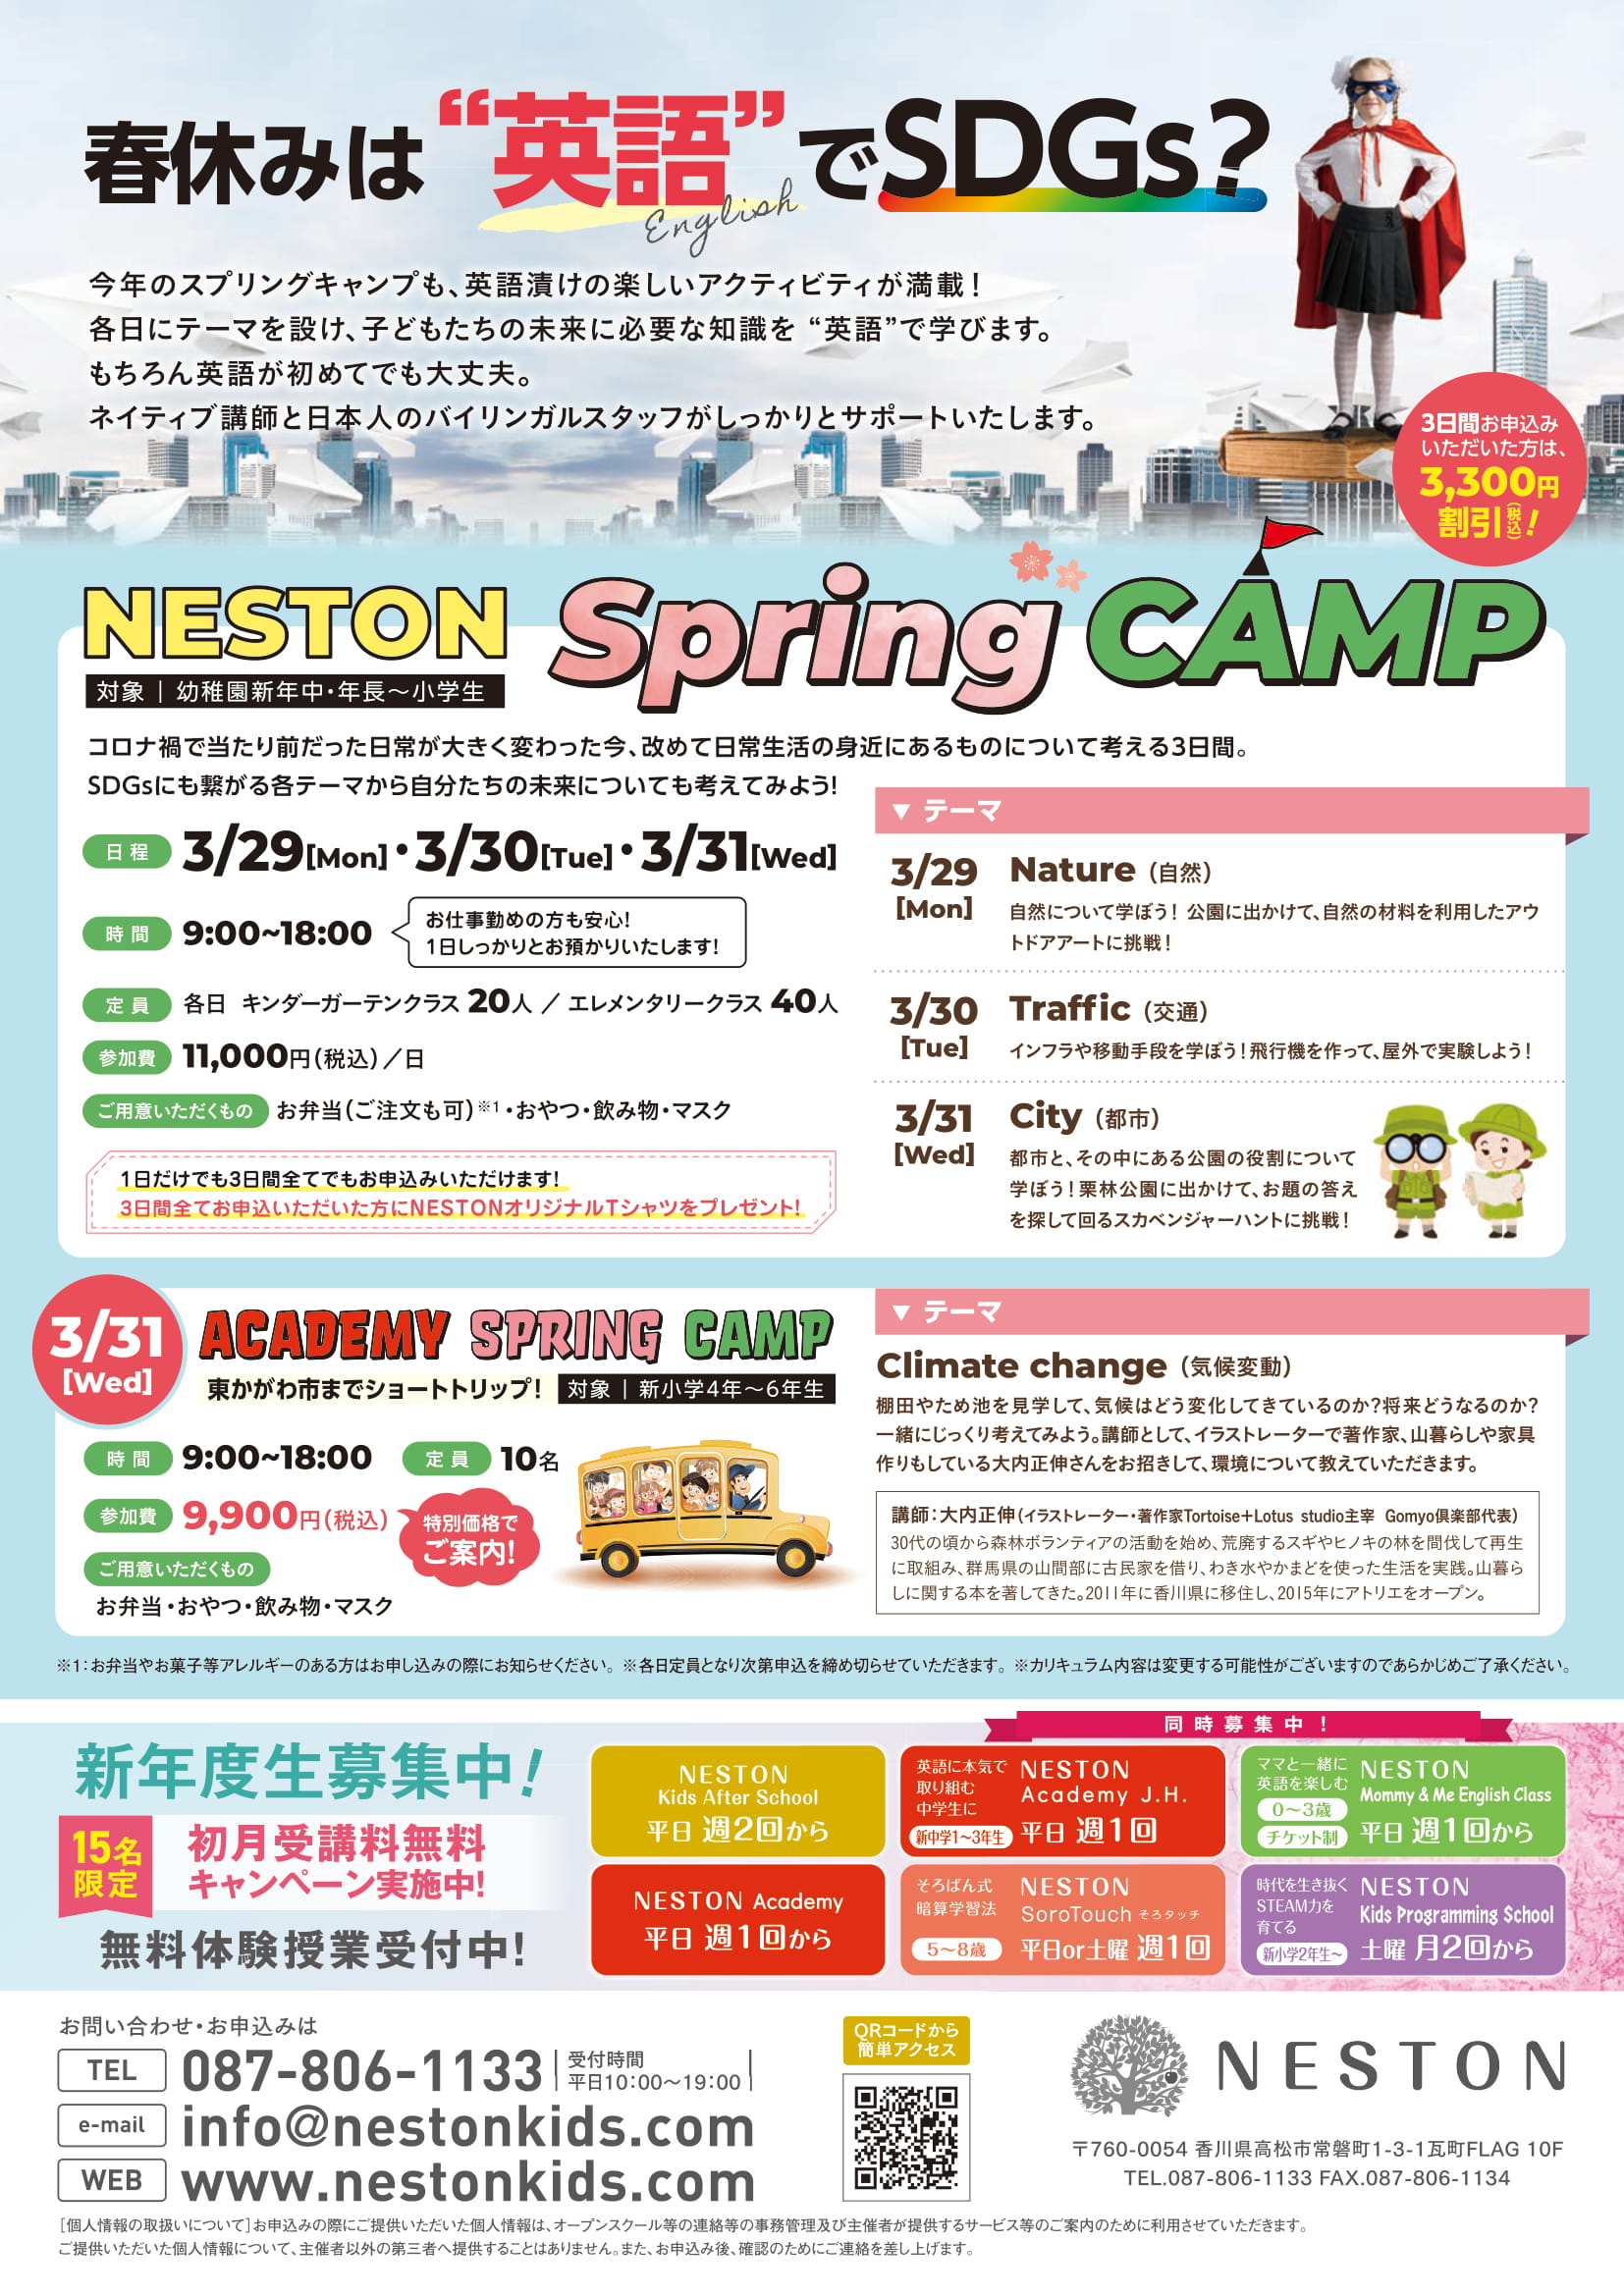 NESTON Spring Camp